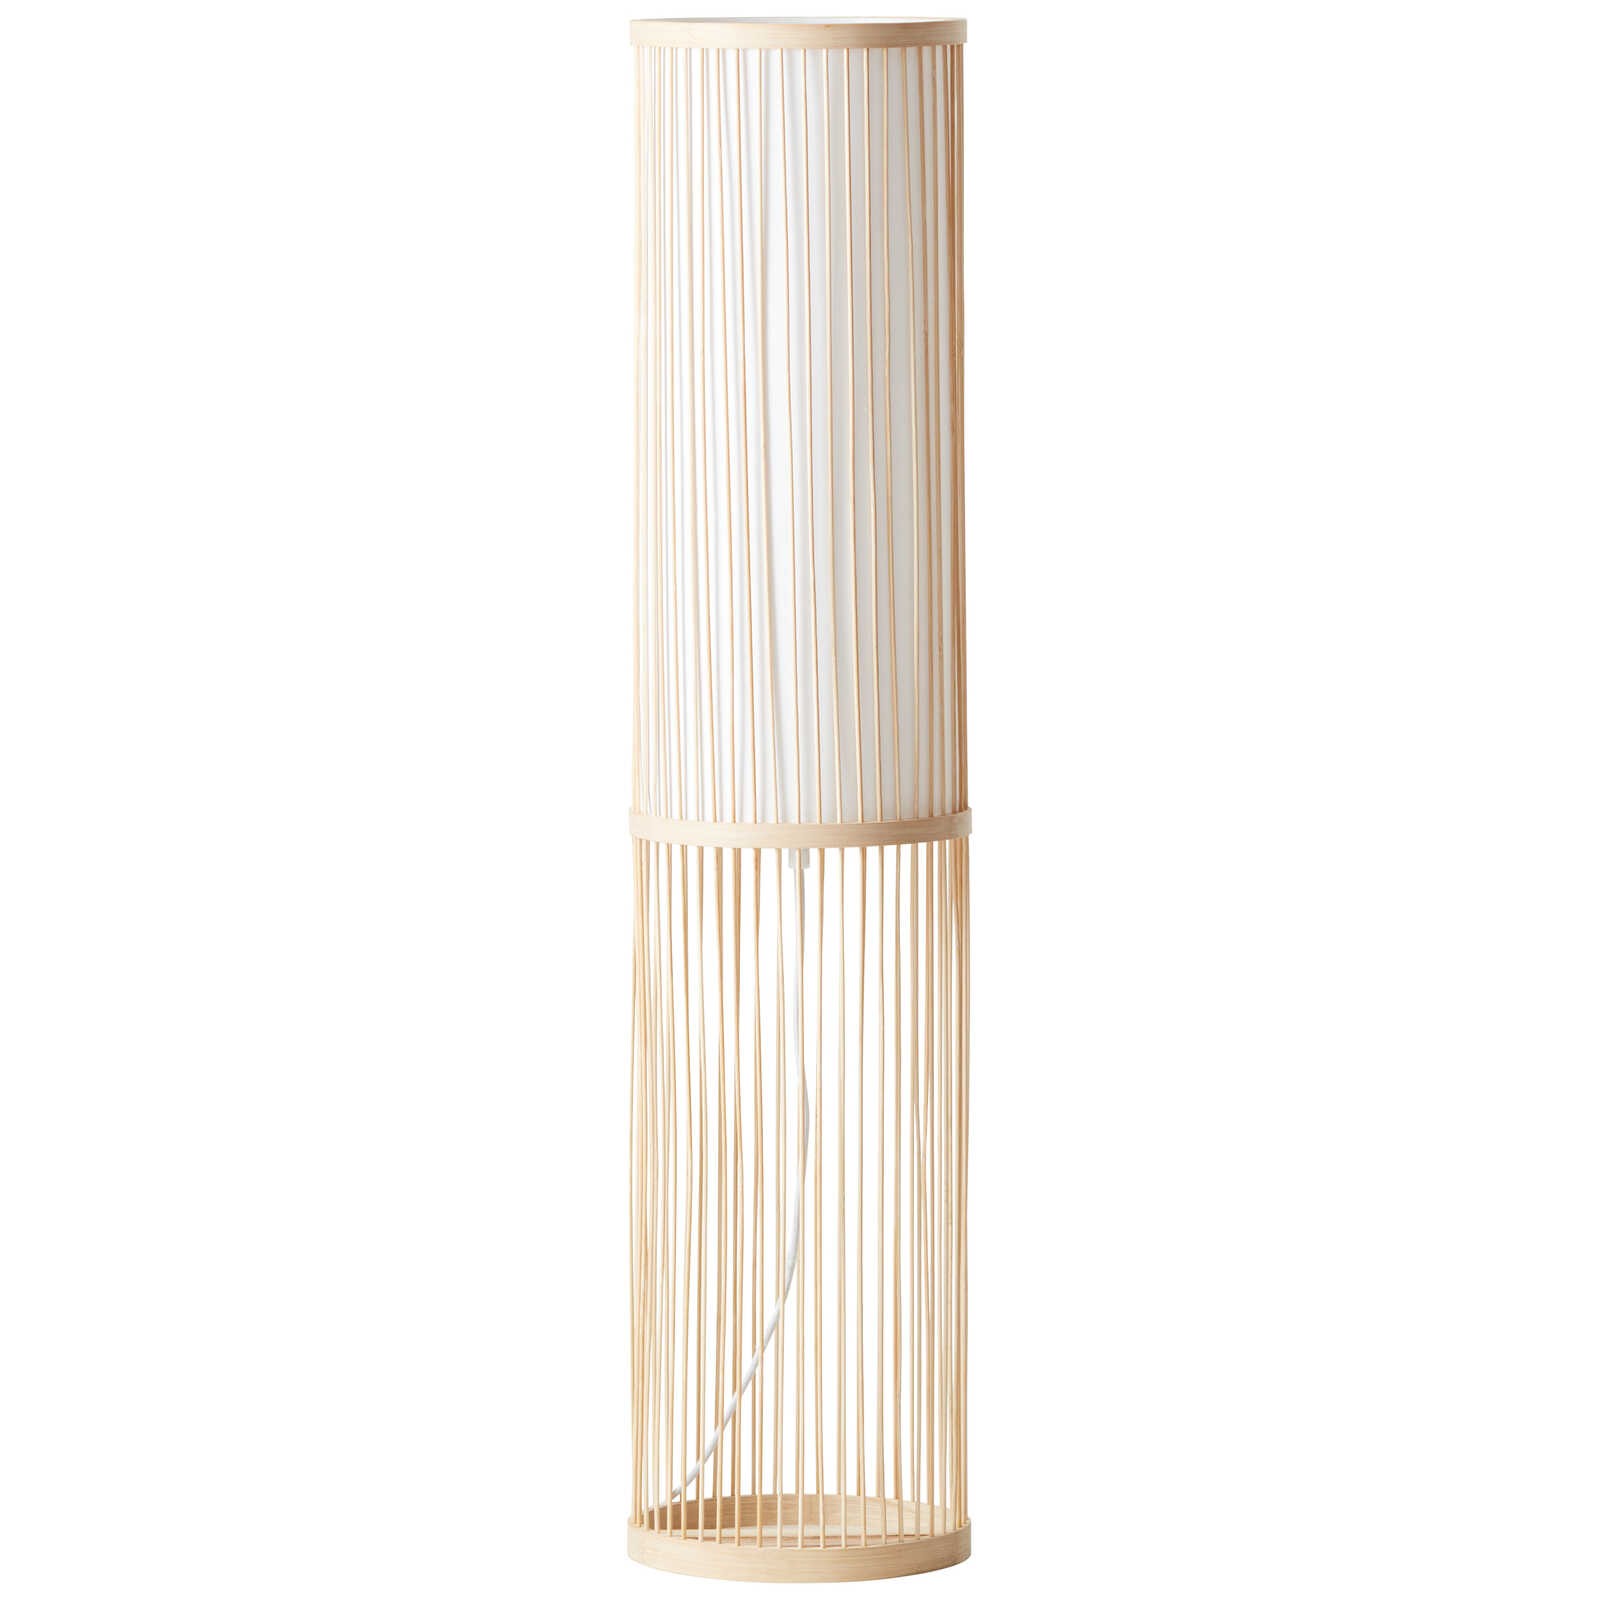             Bamboe vloerlamp - Luise 1 - Bruin
        